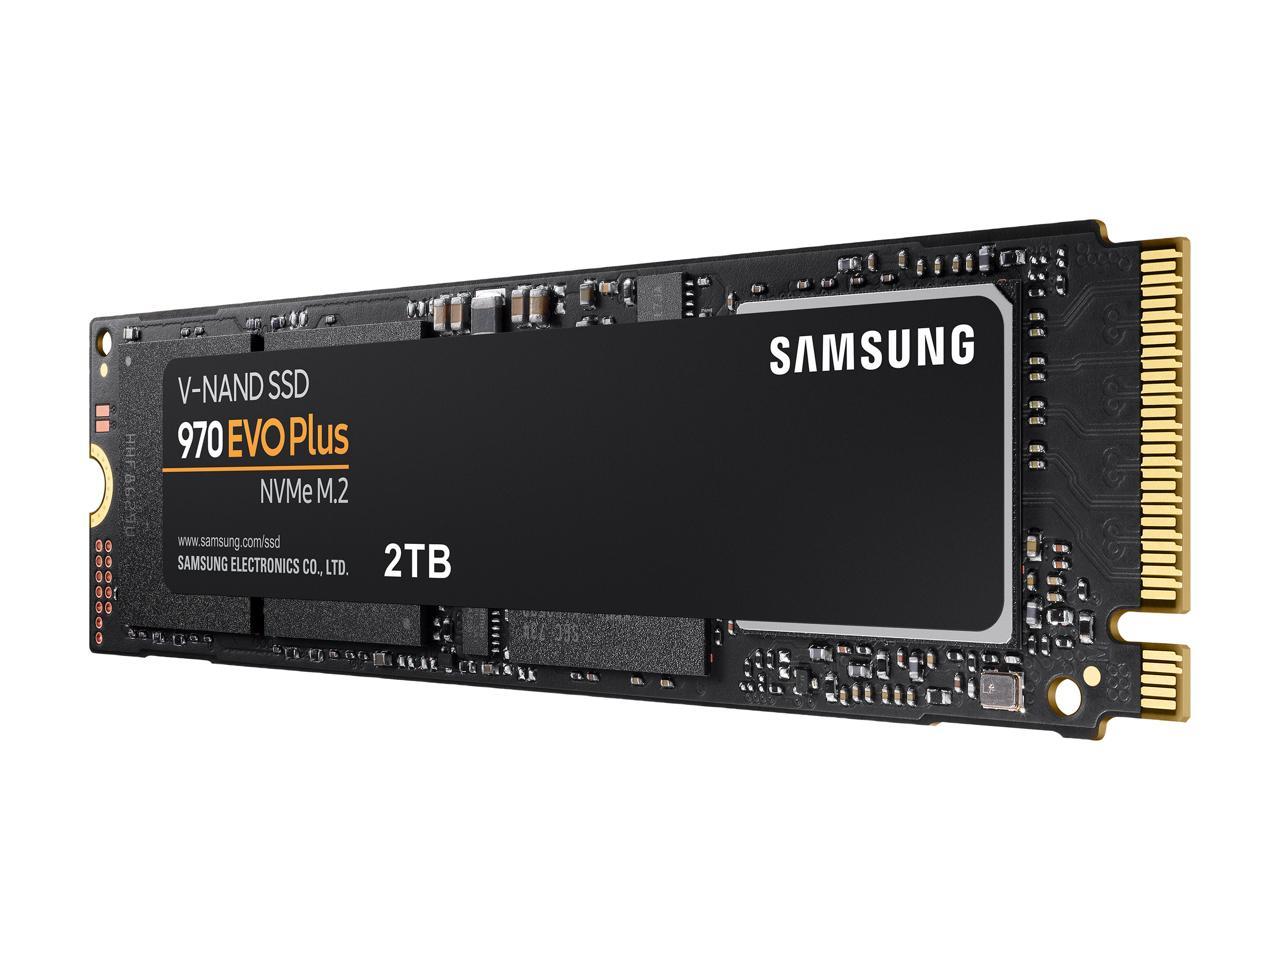 2TB Samsung 970 EVO Plus NVMe SSD $120 at Newegg